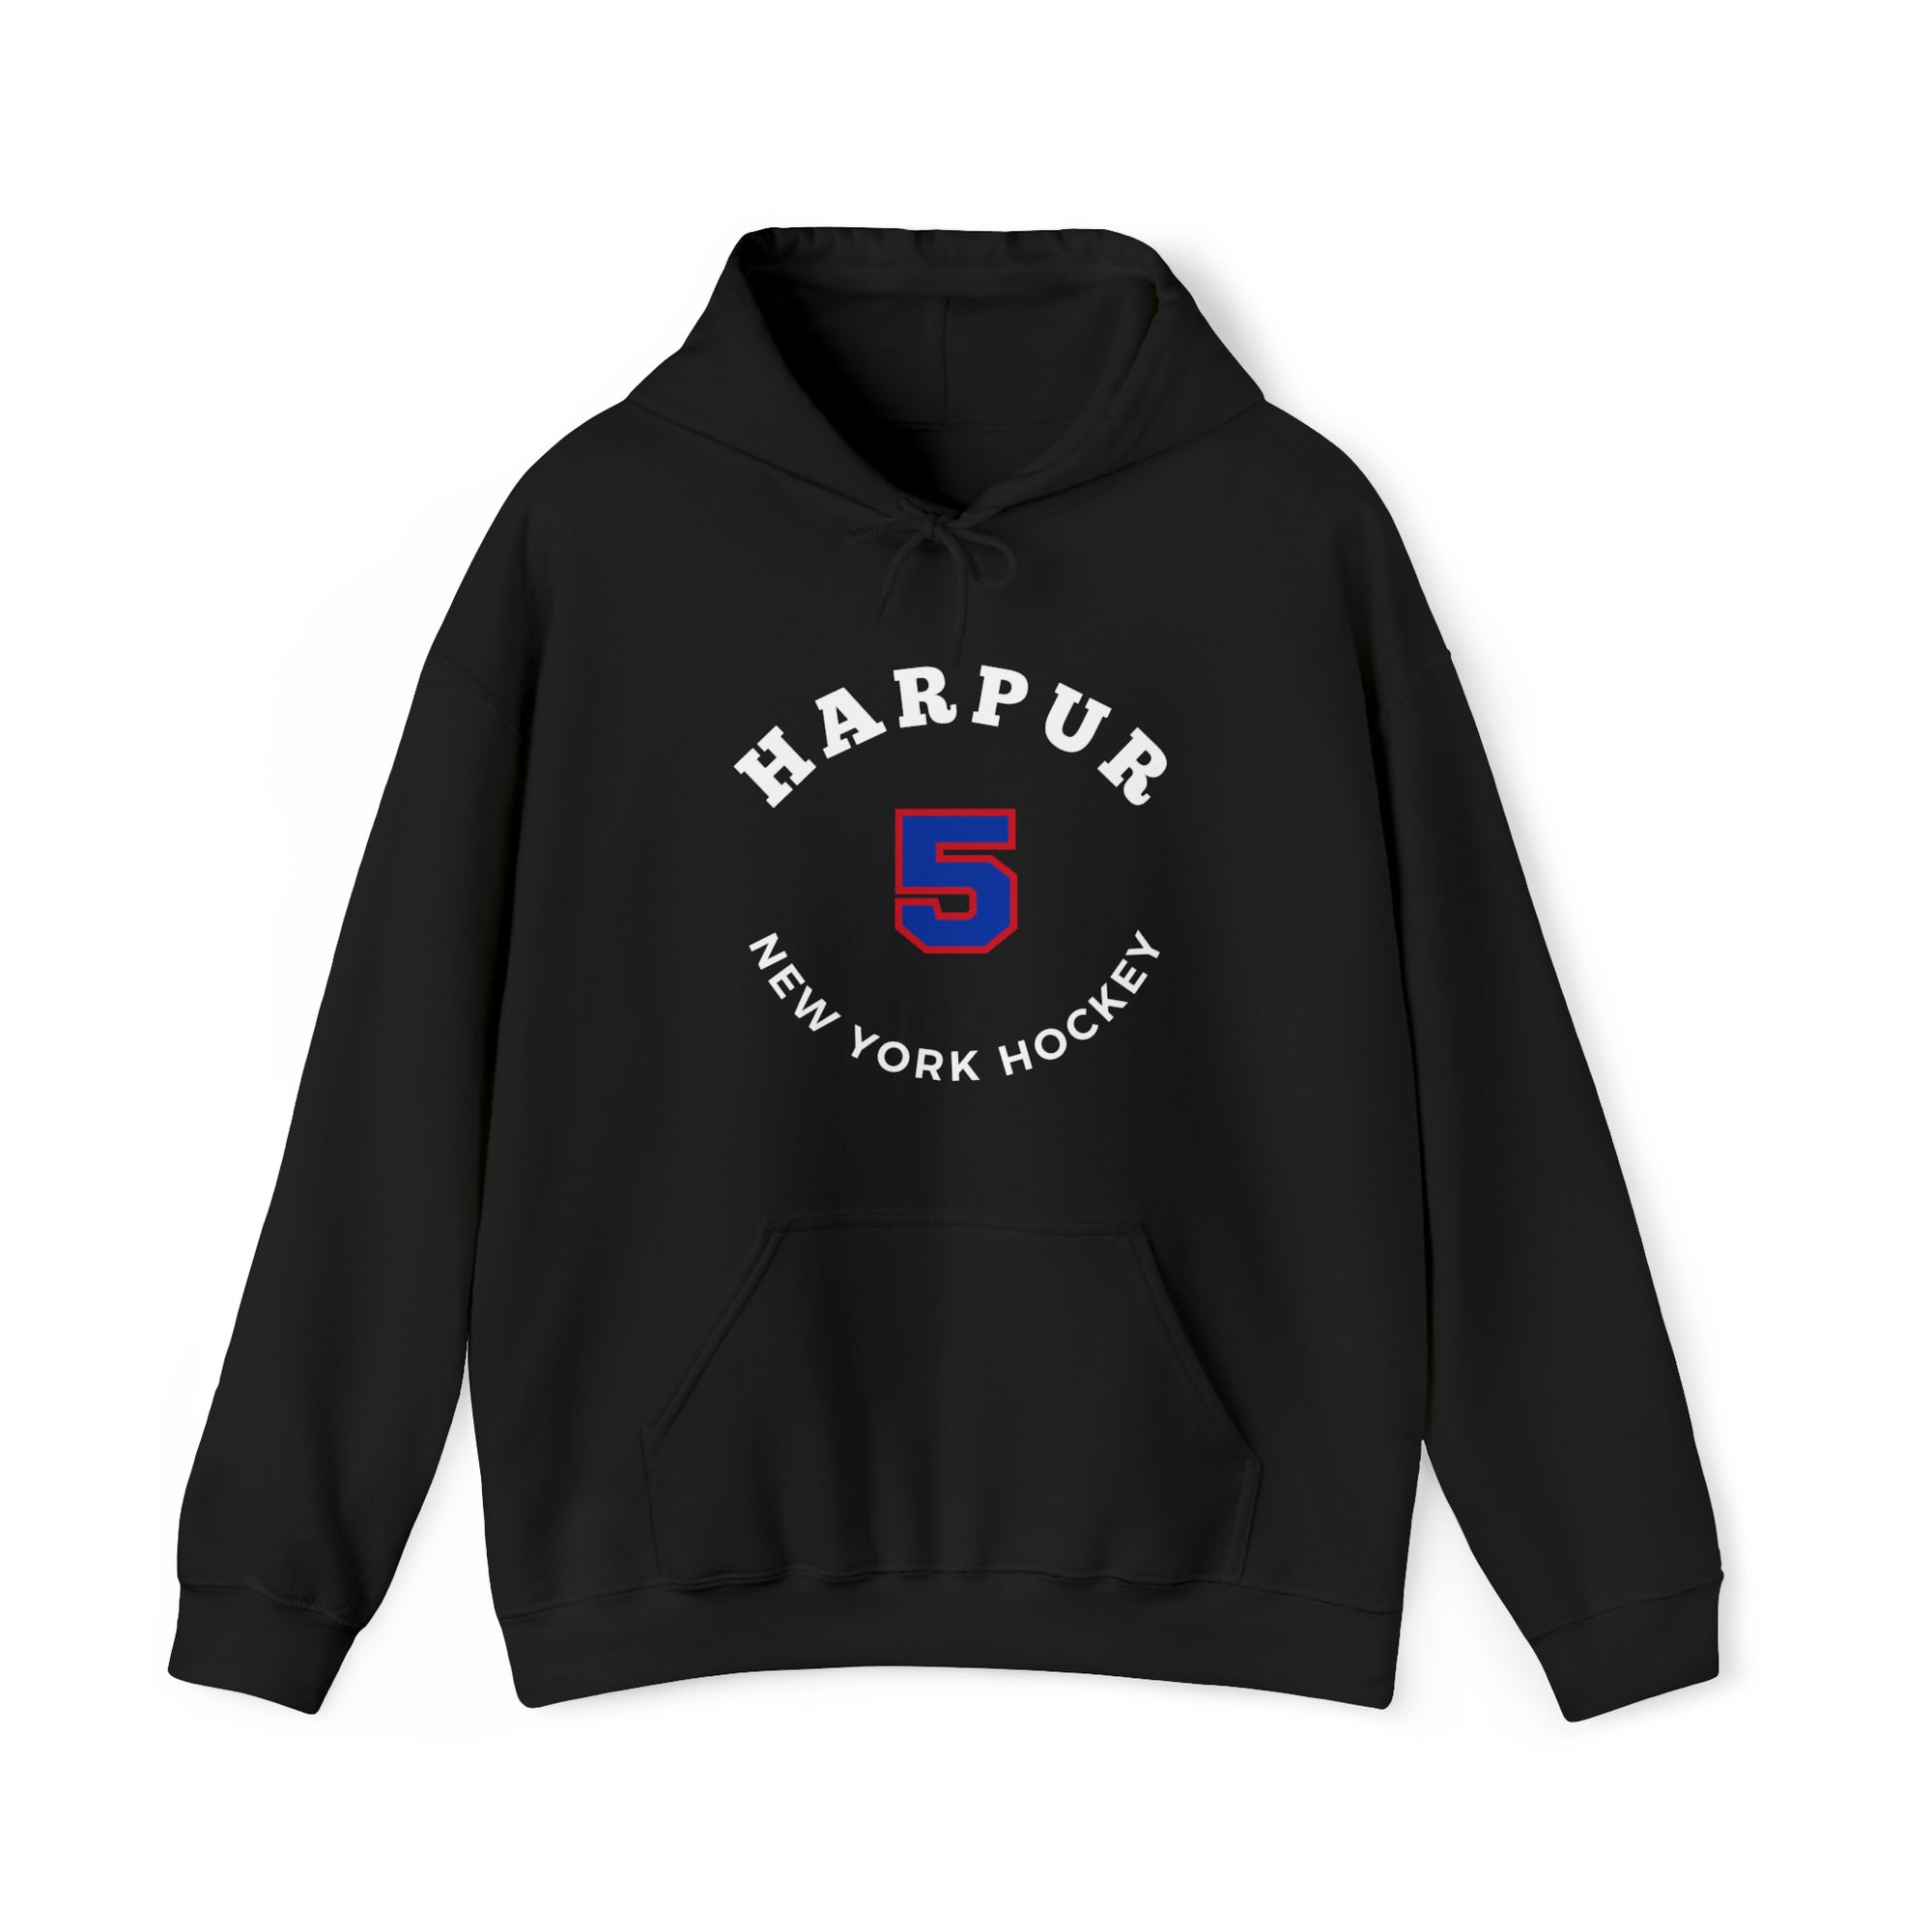 Harpur 5 New York Hockey Number Arch Design Unisex Hooded Sweatshirt